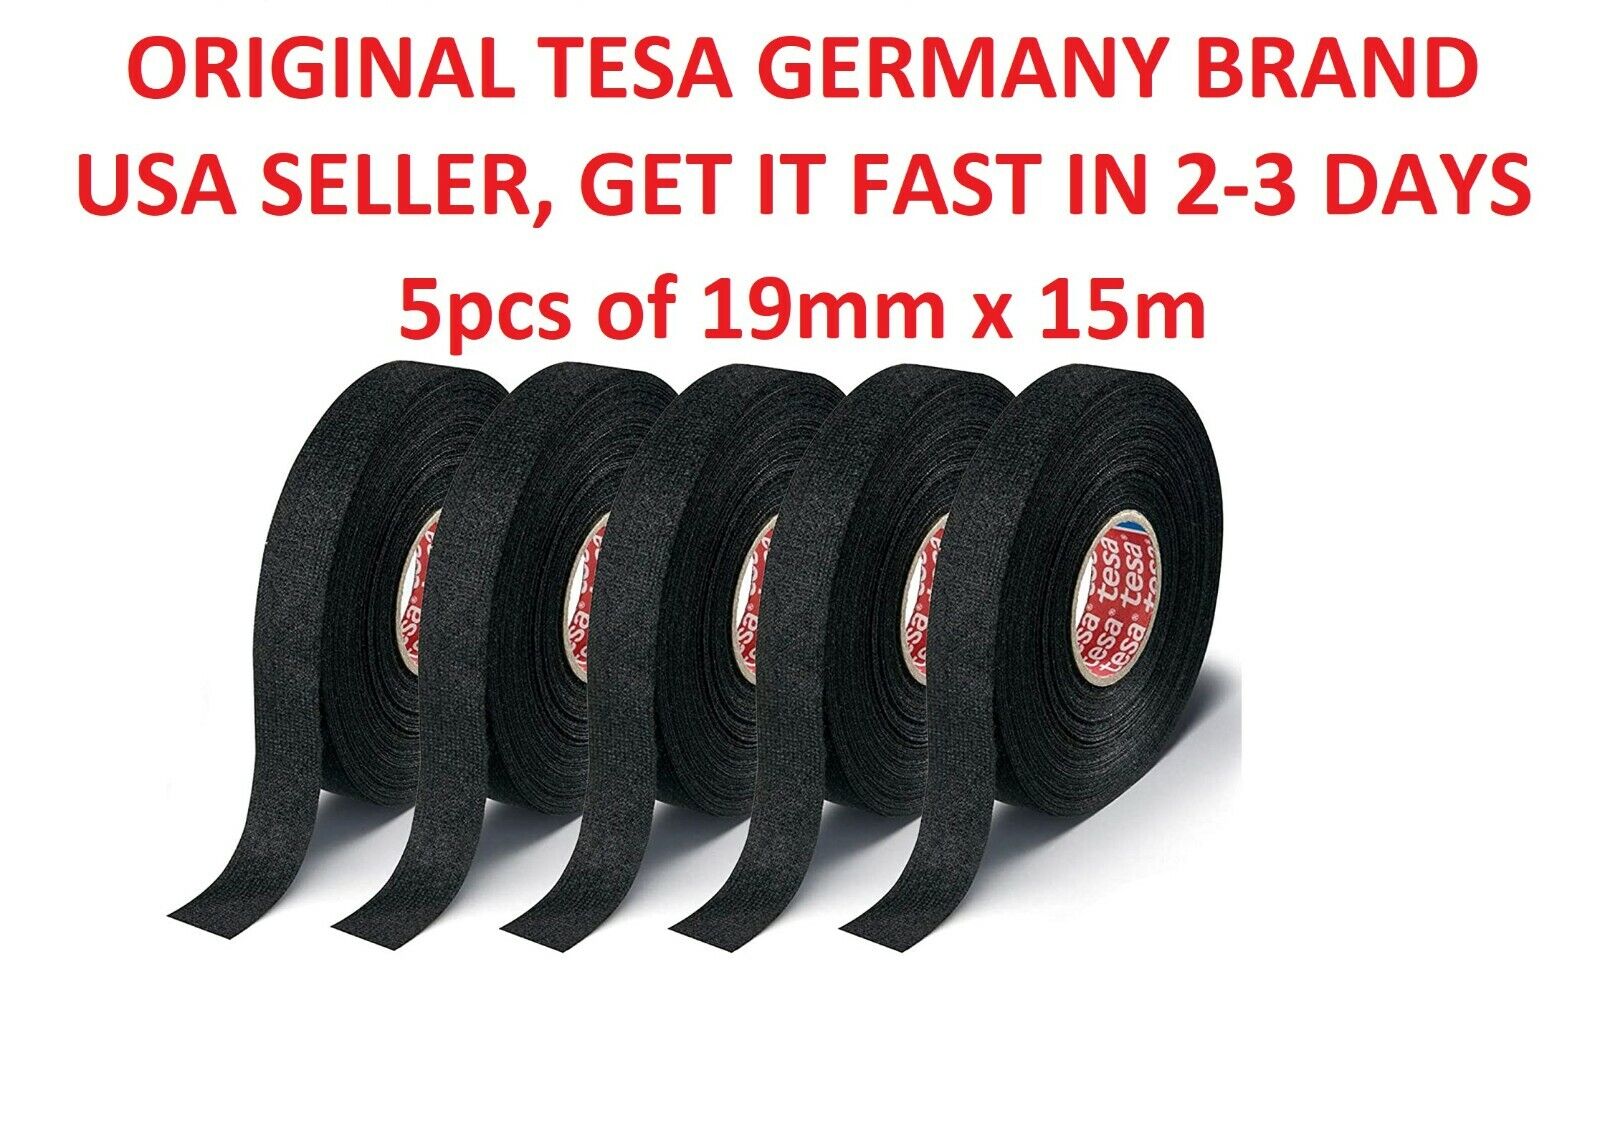 5 x Tesa Original Isoband 51608 15m X 19mm Adhesive Wiring Loom Cloth Tape  NEW 